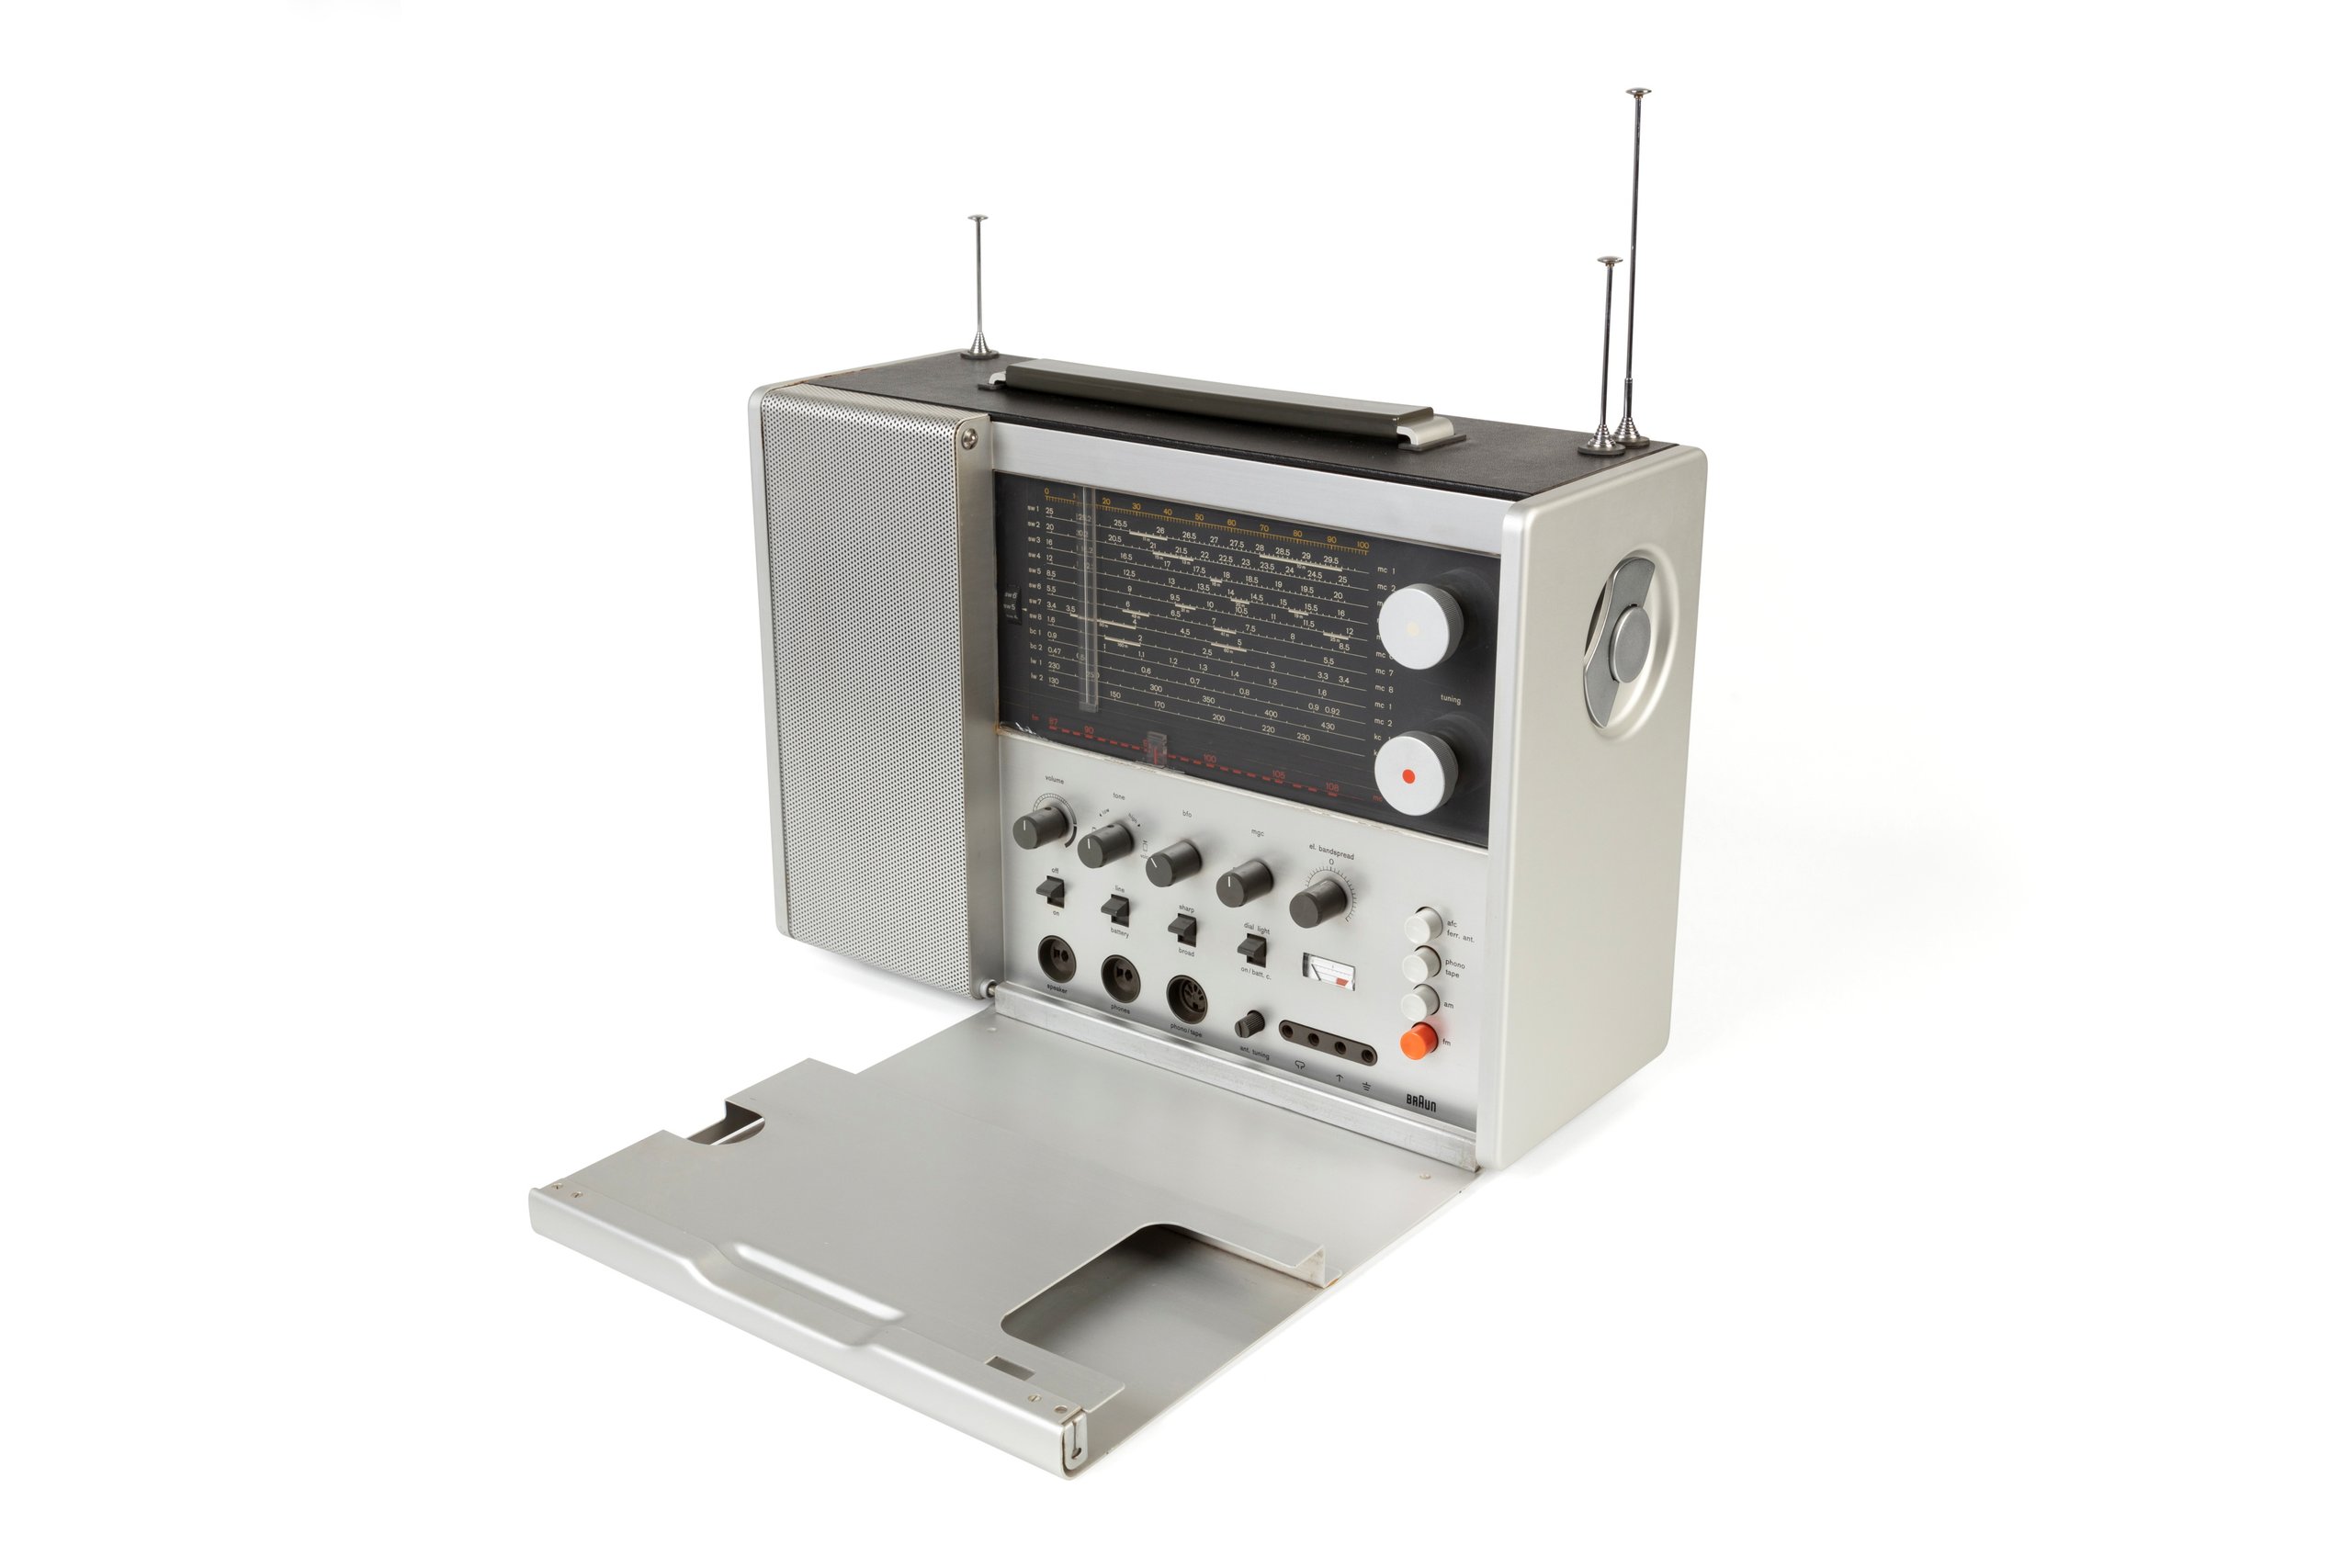 Braun T1000 multi band radio designed by Dieter Rams